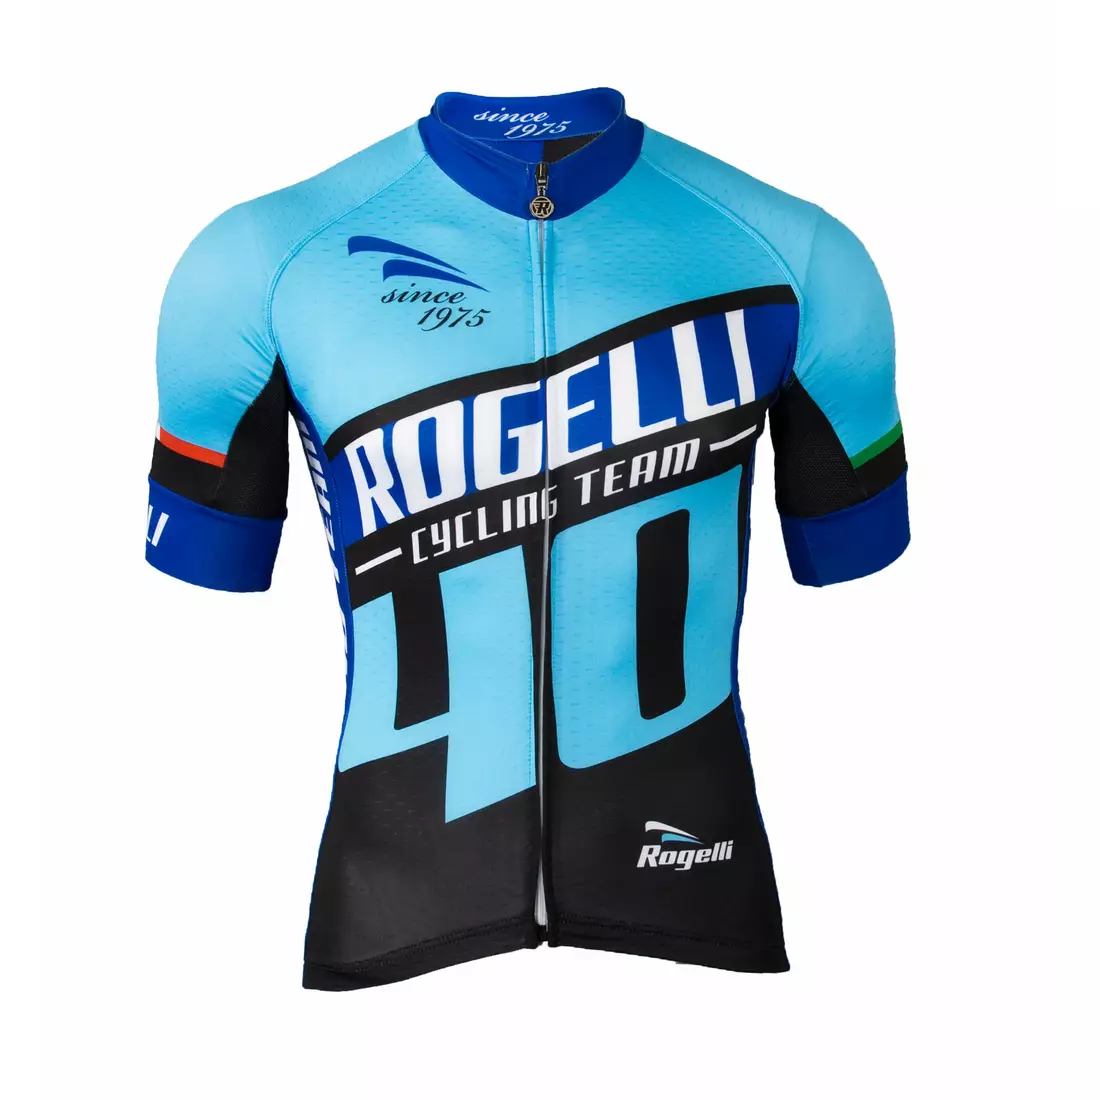 ROGELLI 40 ANNIVERSARY cycling jersey, blue